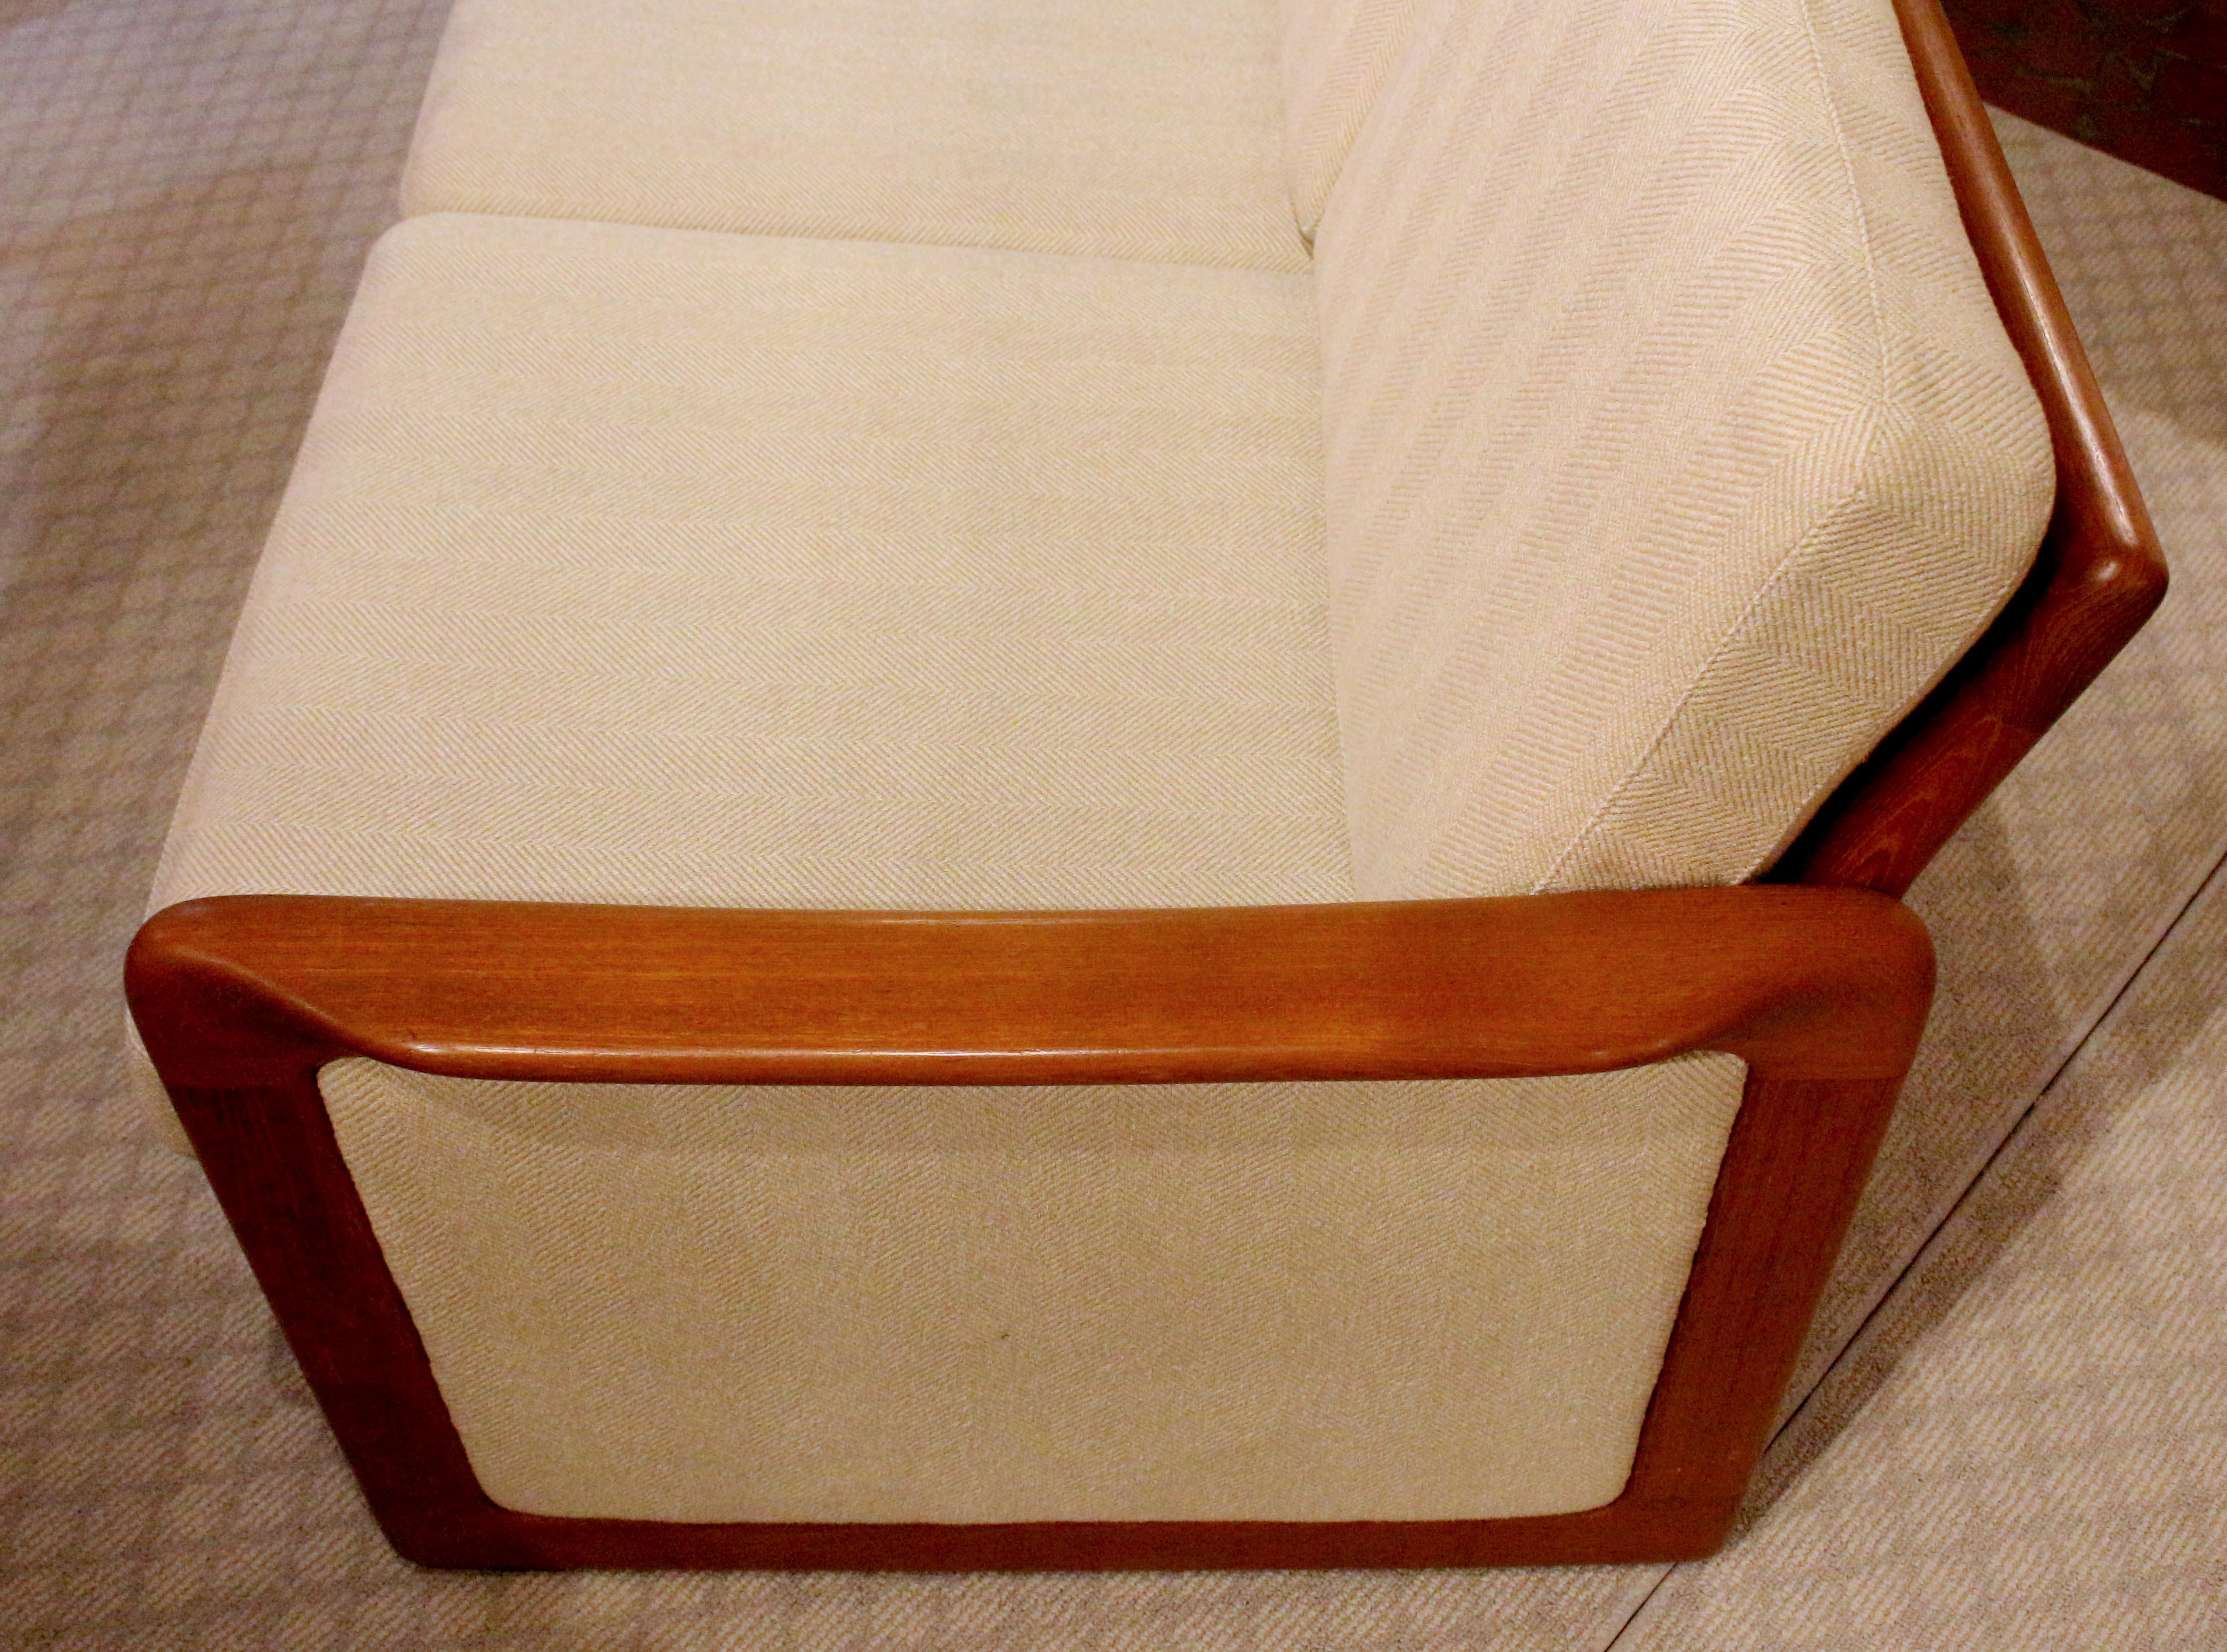 20th Century Mid-Century Modern Teak & Upholstered 3-seat Sofa, c.1960s-70s, American